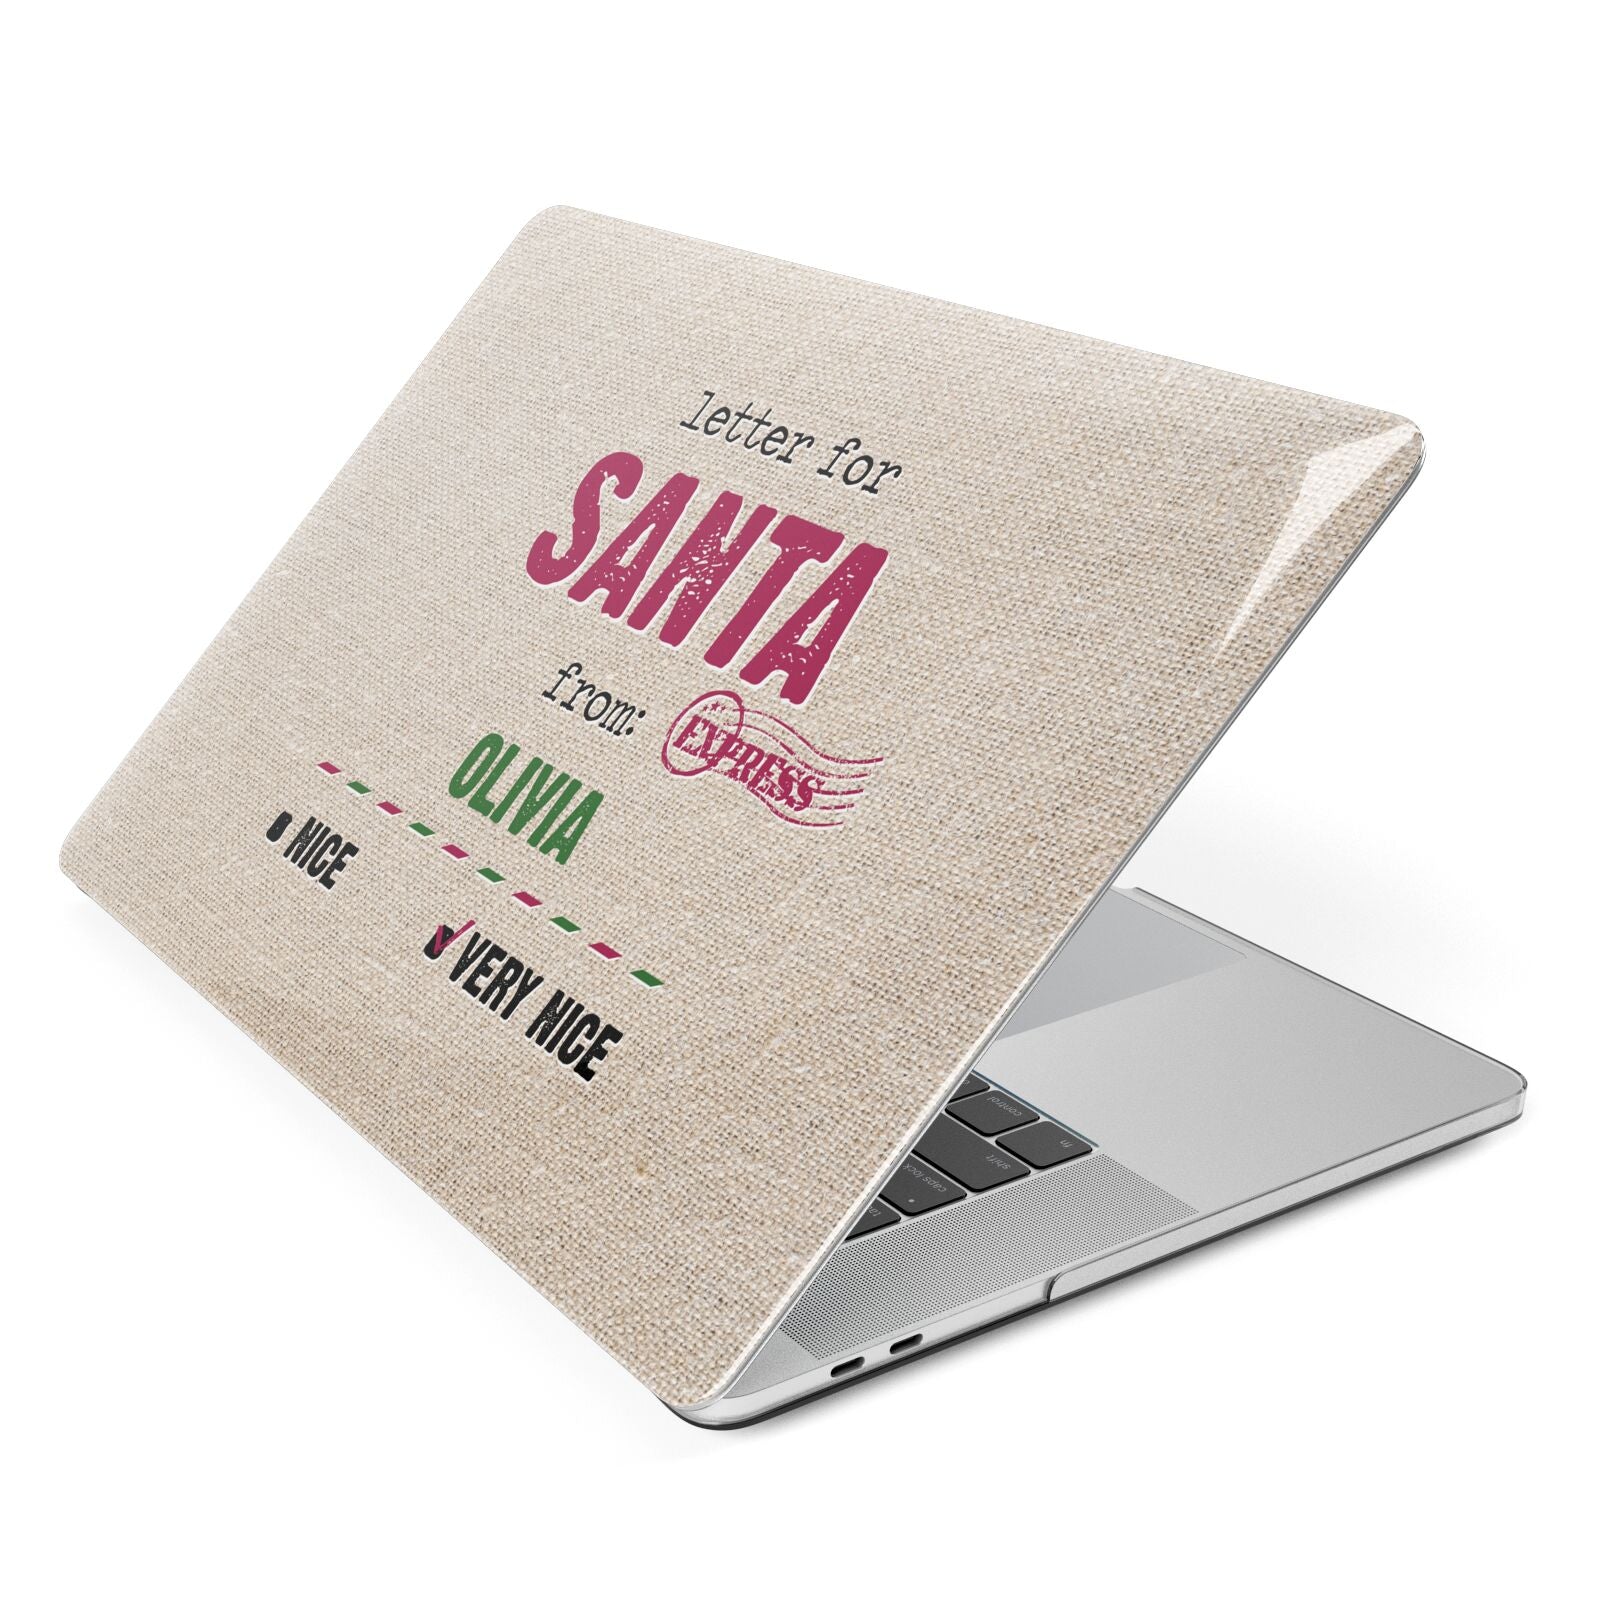 Letters to Santa Personalised Apple MacBook Case Side View